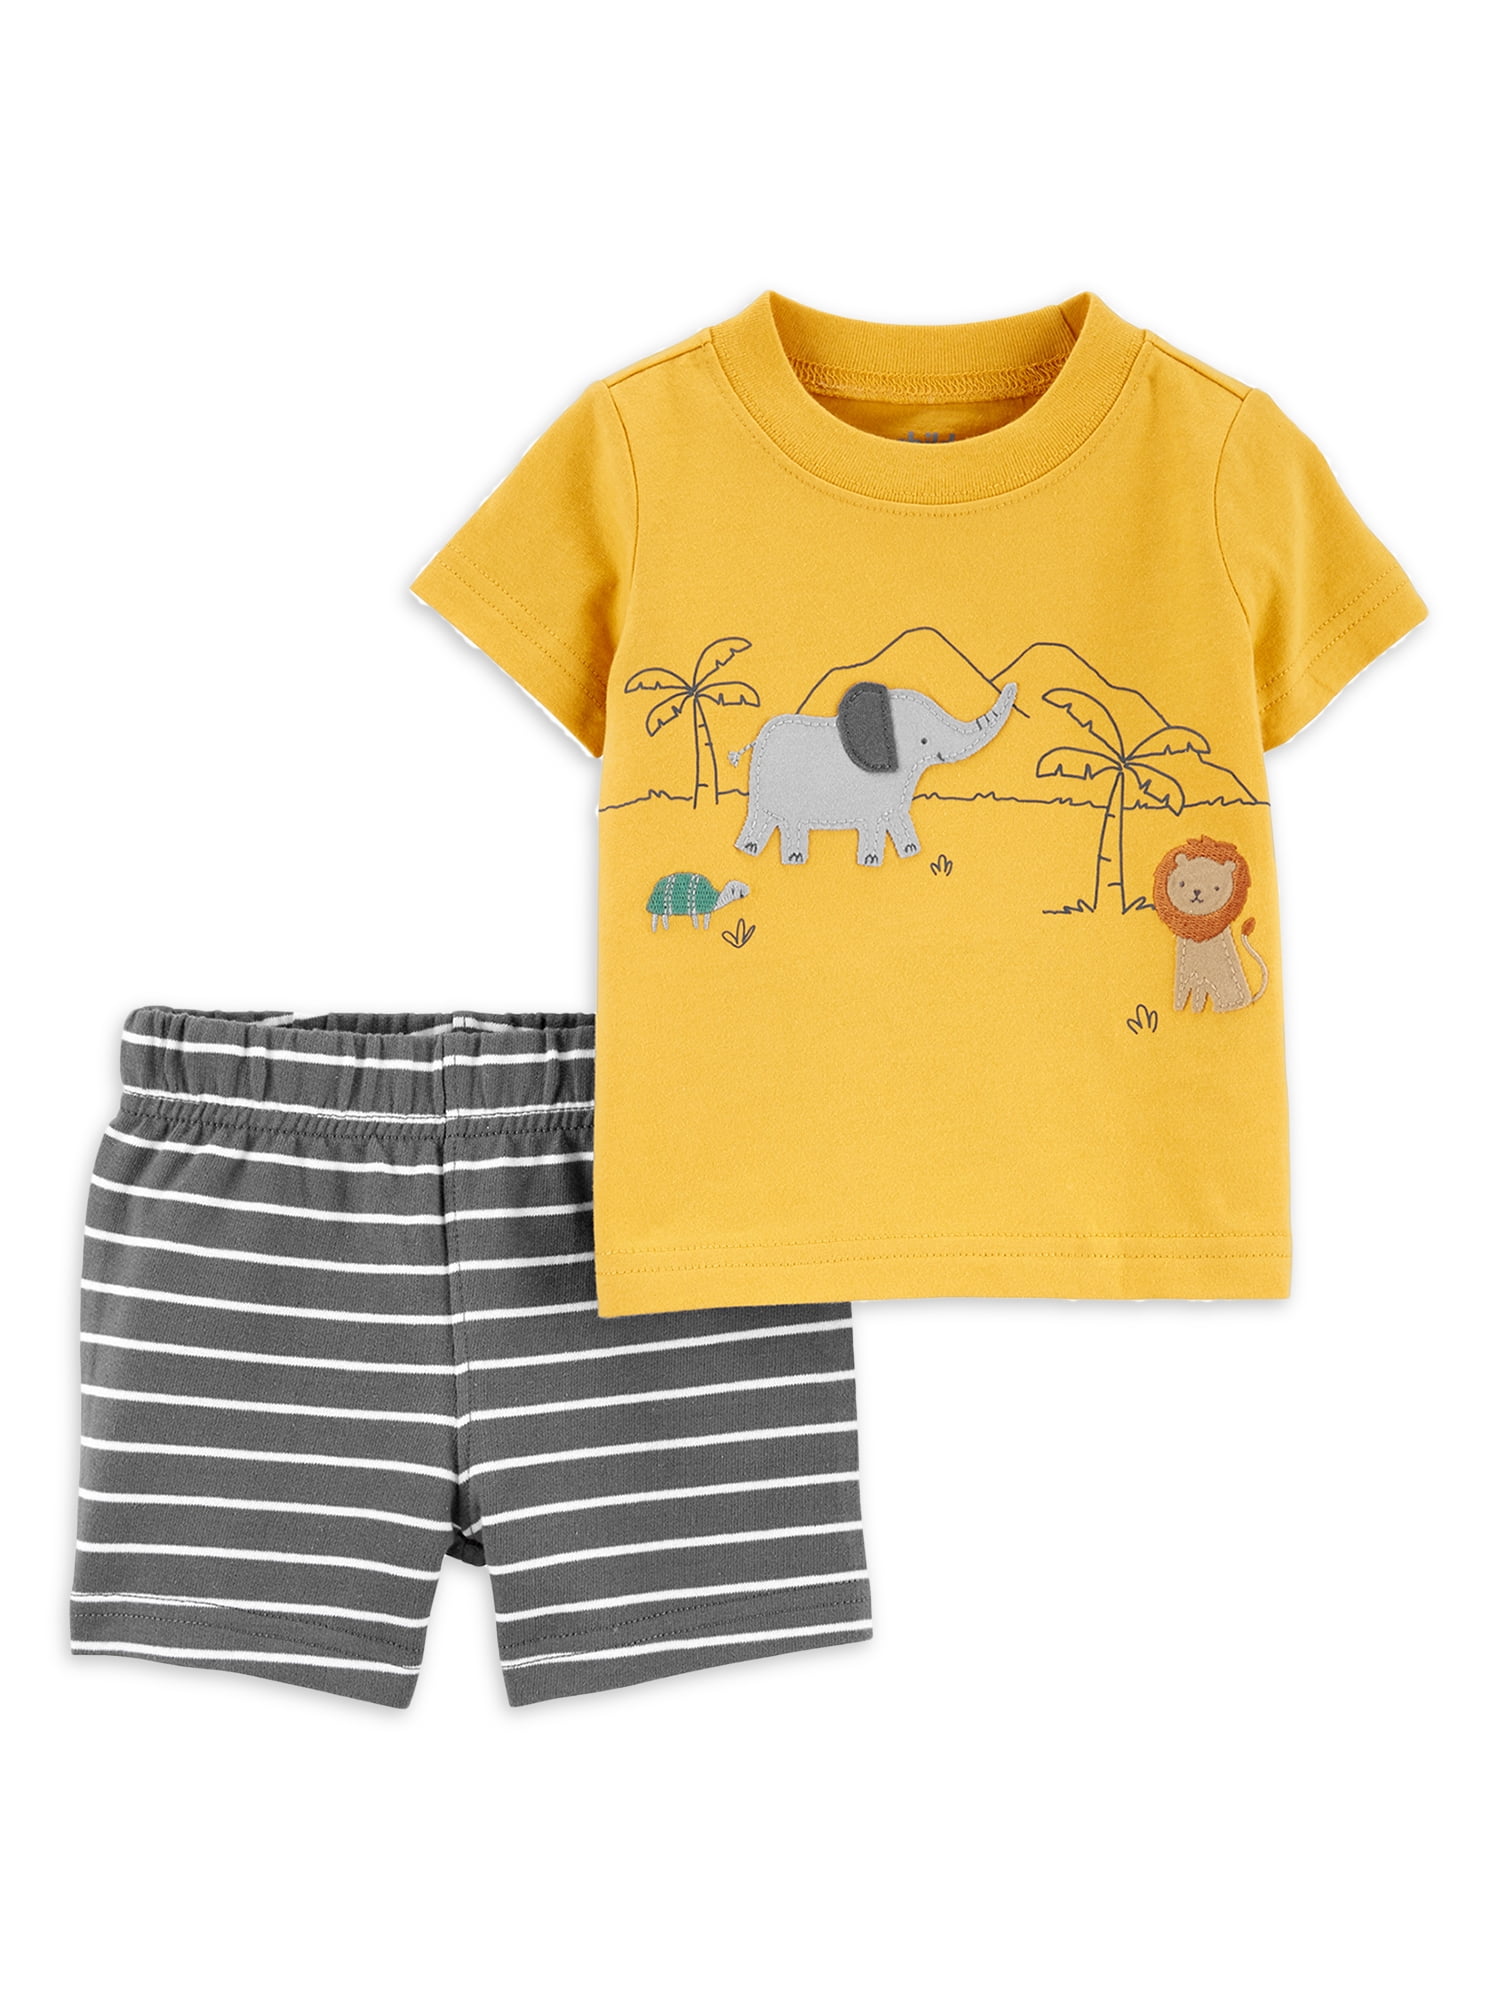 Toddler Little Baby Boy Girl Cotton Short Sleeveless Tee T Shirt Tank Top Shorts Pant 2PC Set Outfit 